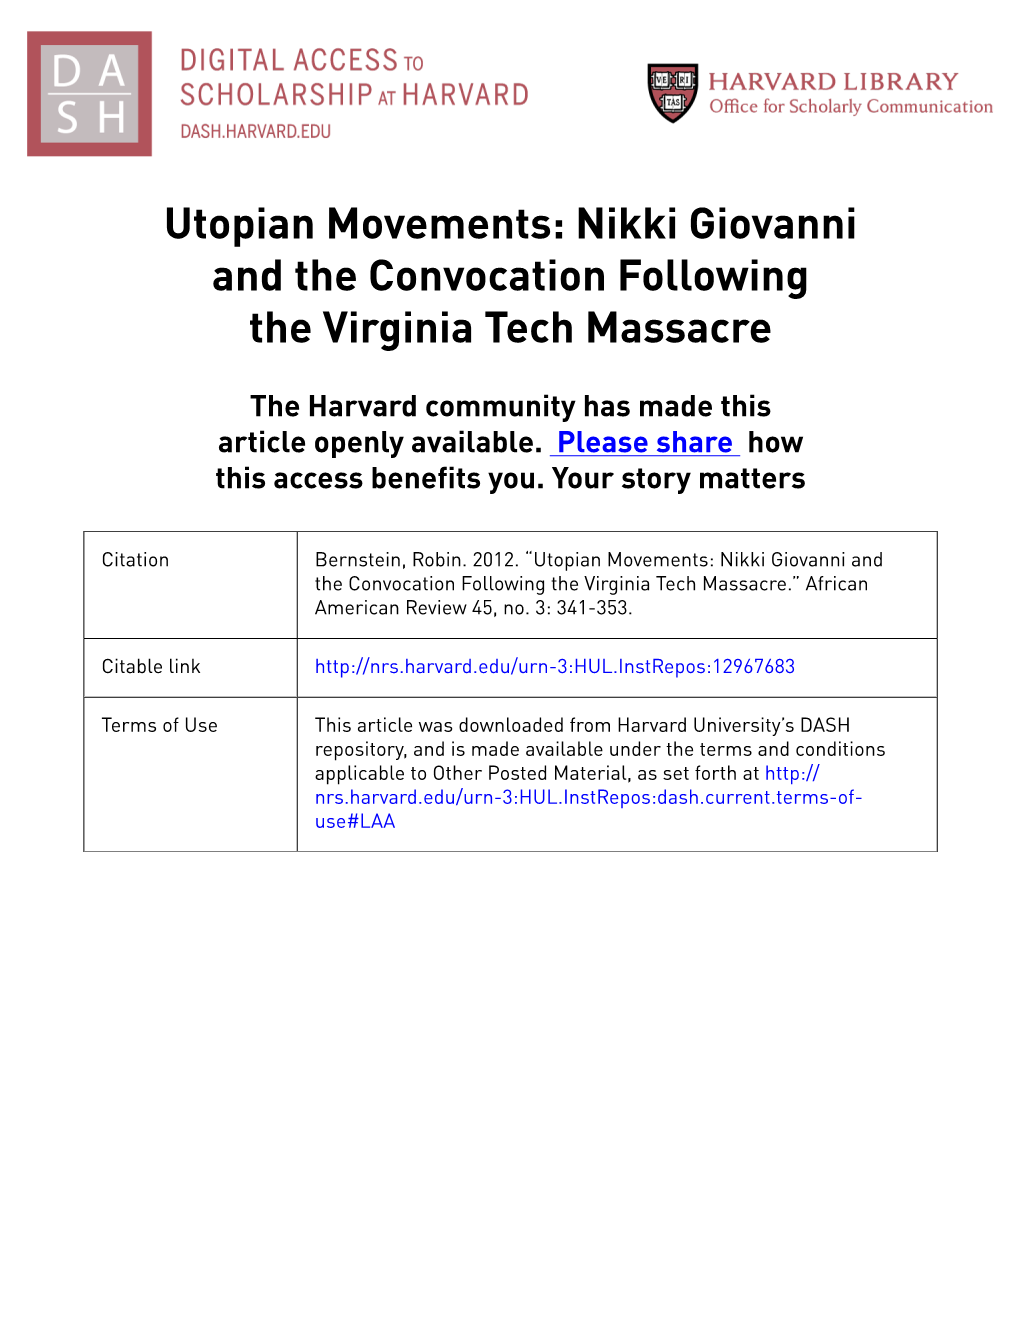 Utopian Movements: Nikki Giovanni and the Convocation Following the Virginia Tech Massacre